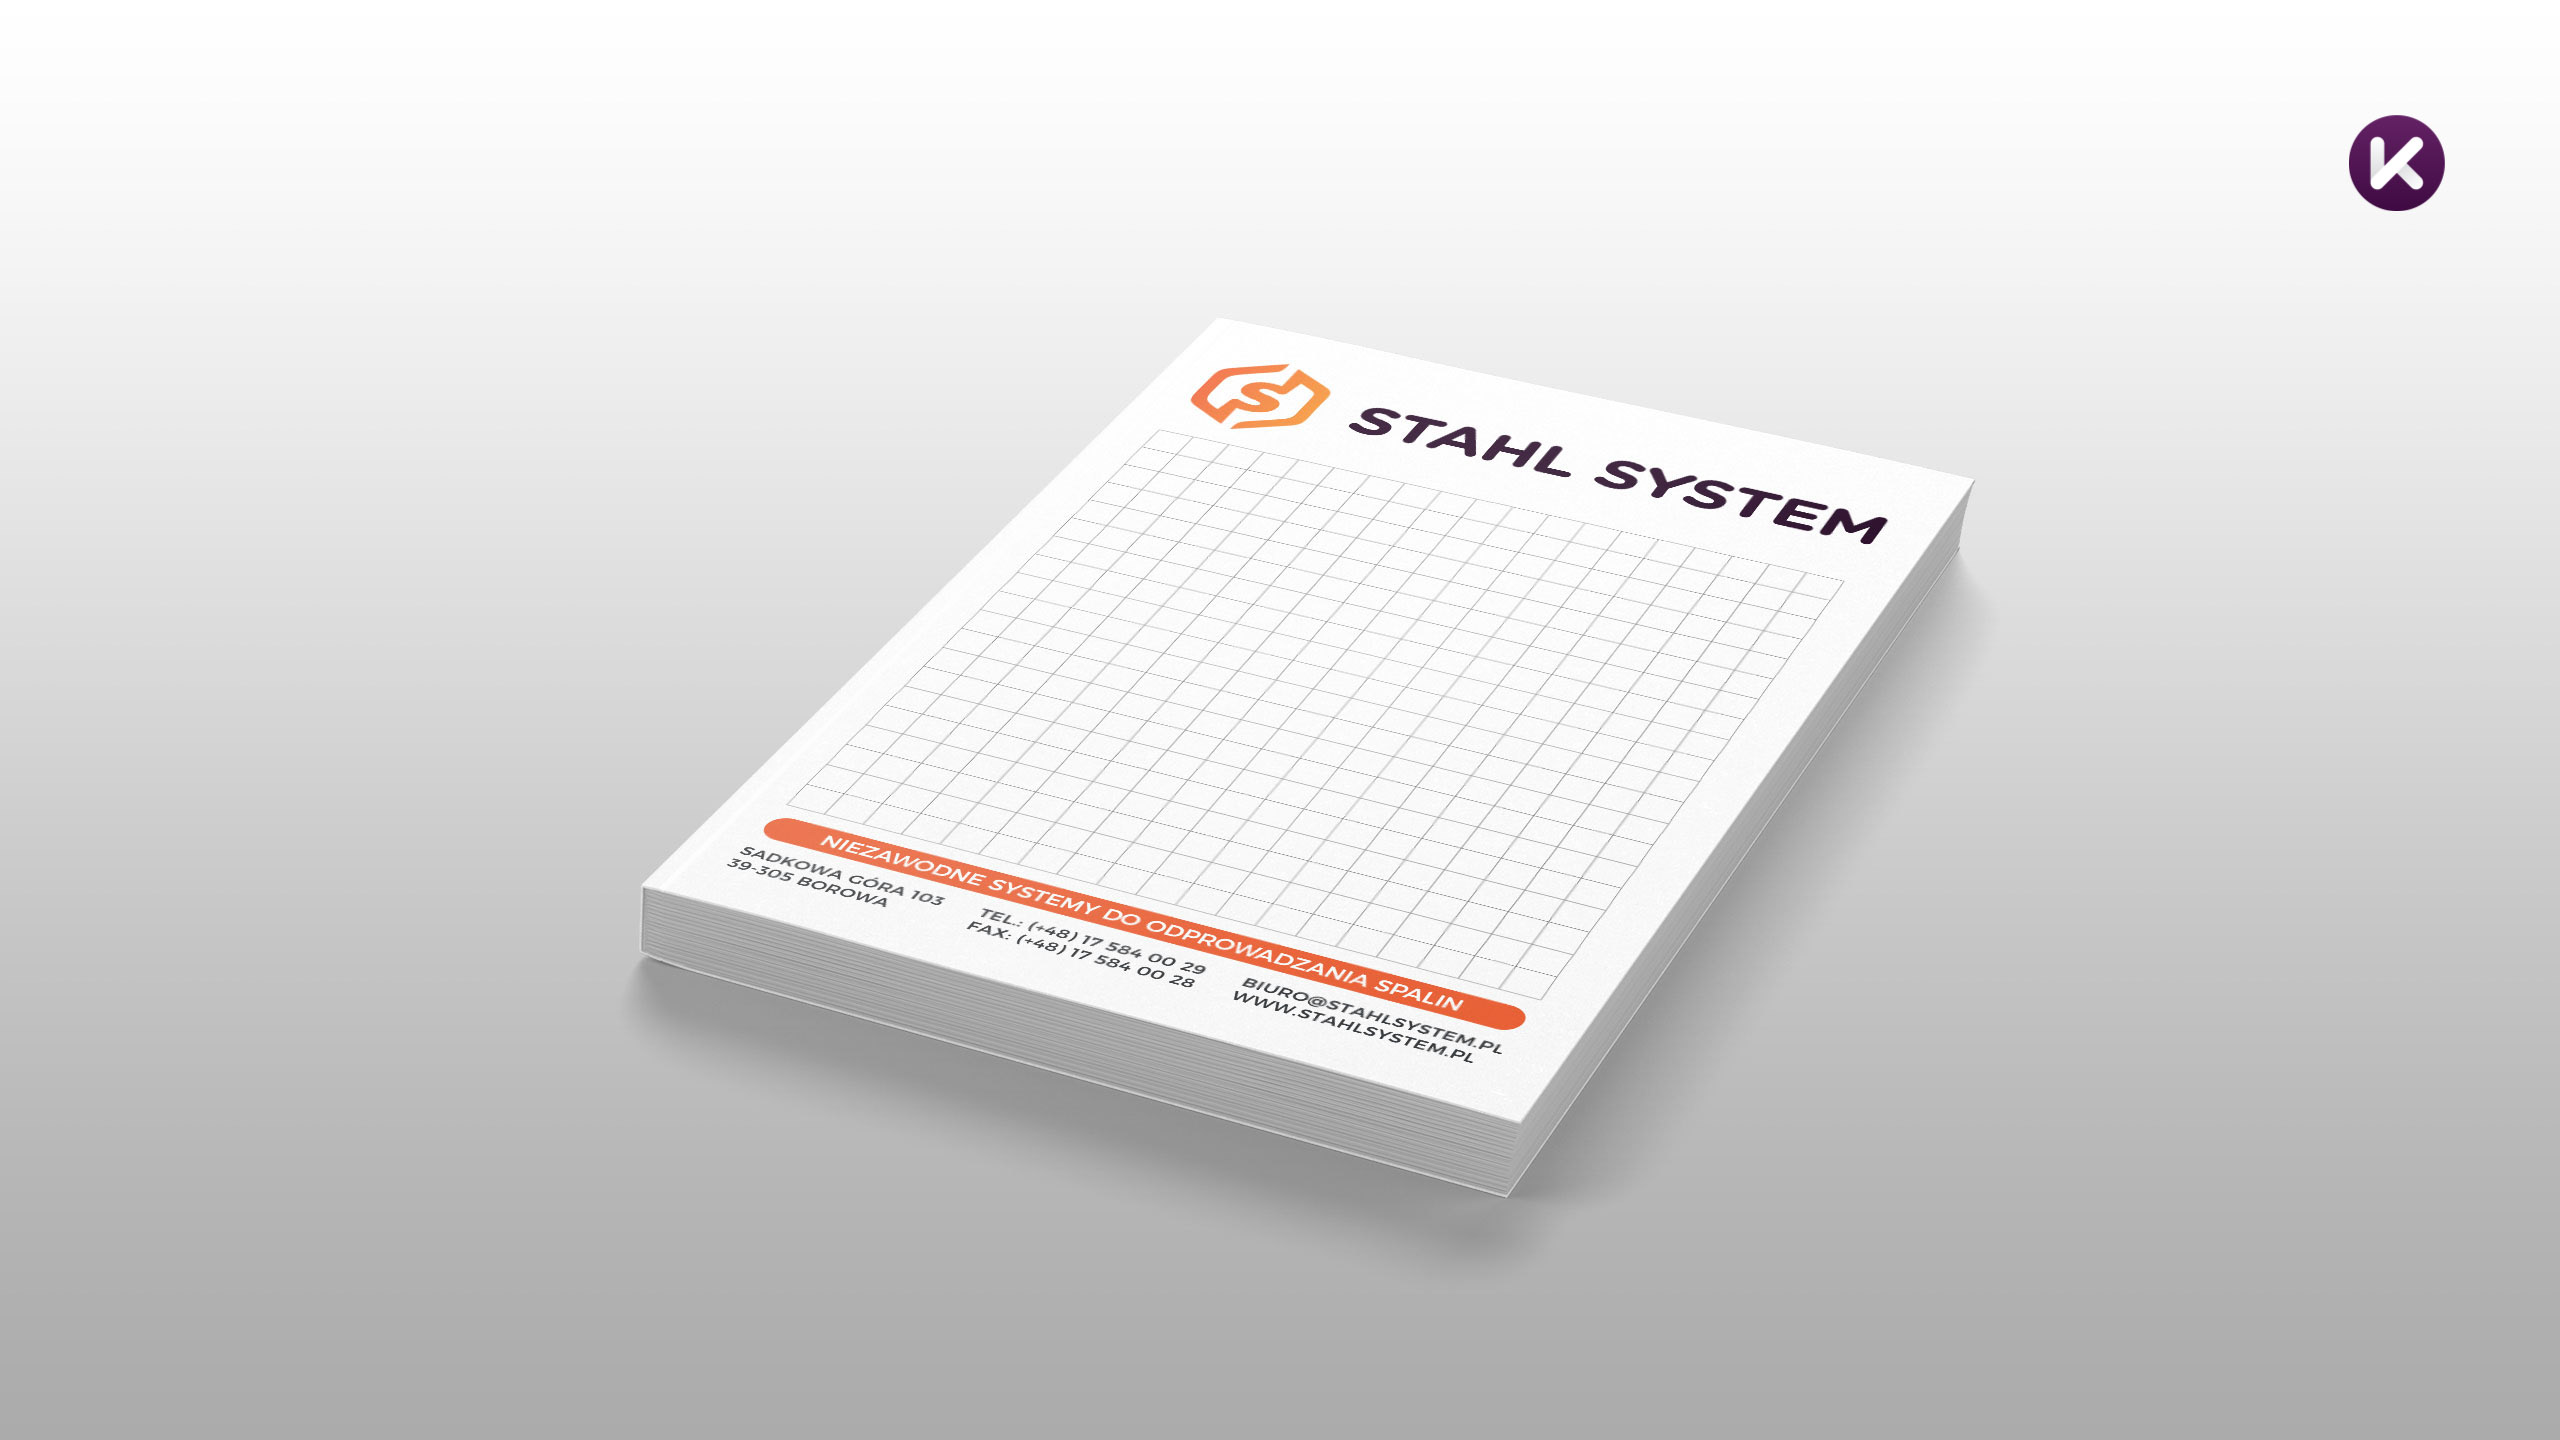 Notes firmowy z logo Stahl System